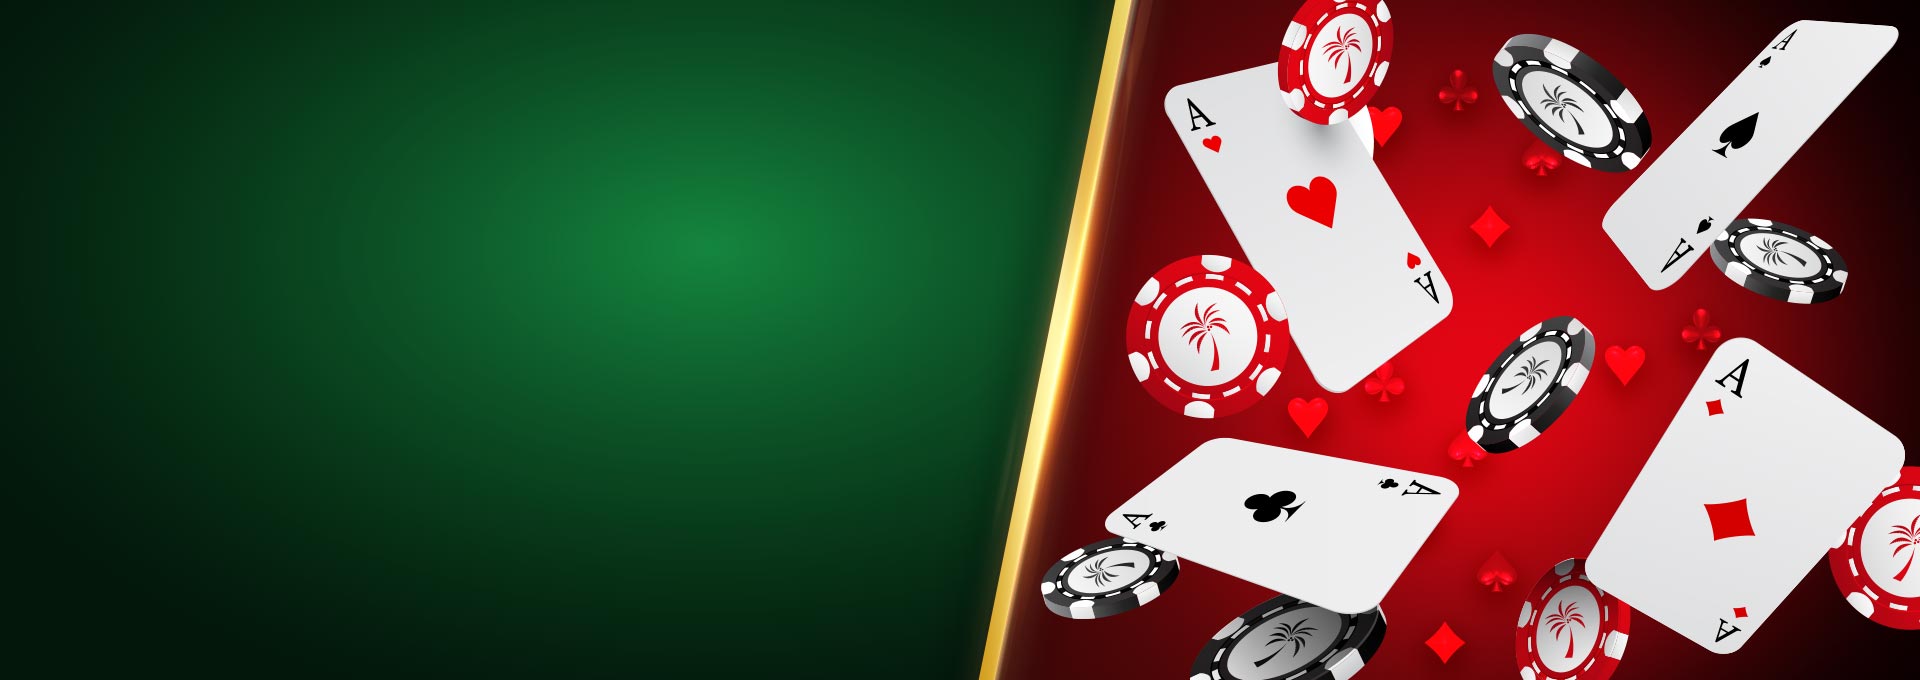 Casino online sin deposito bono